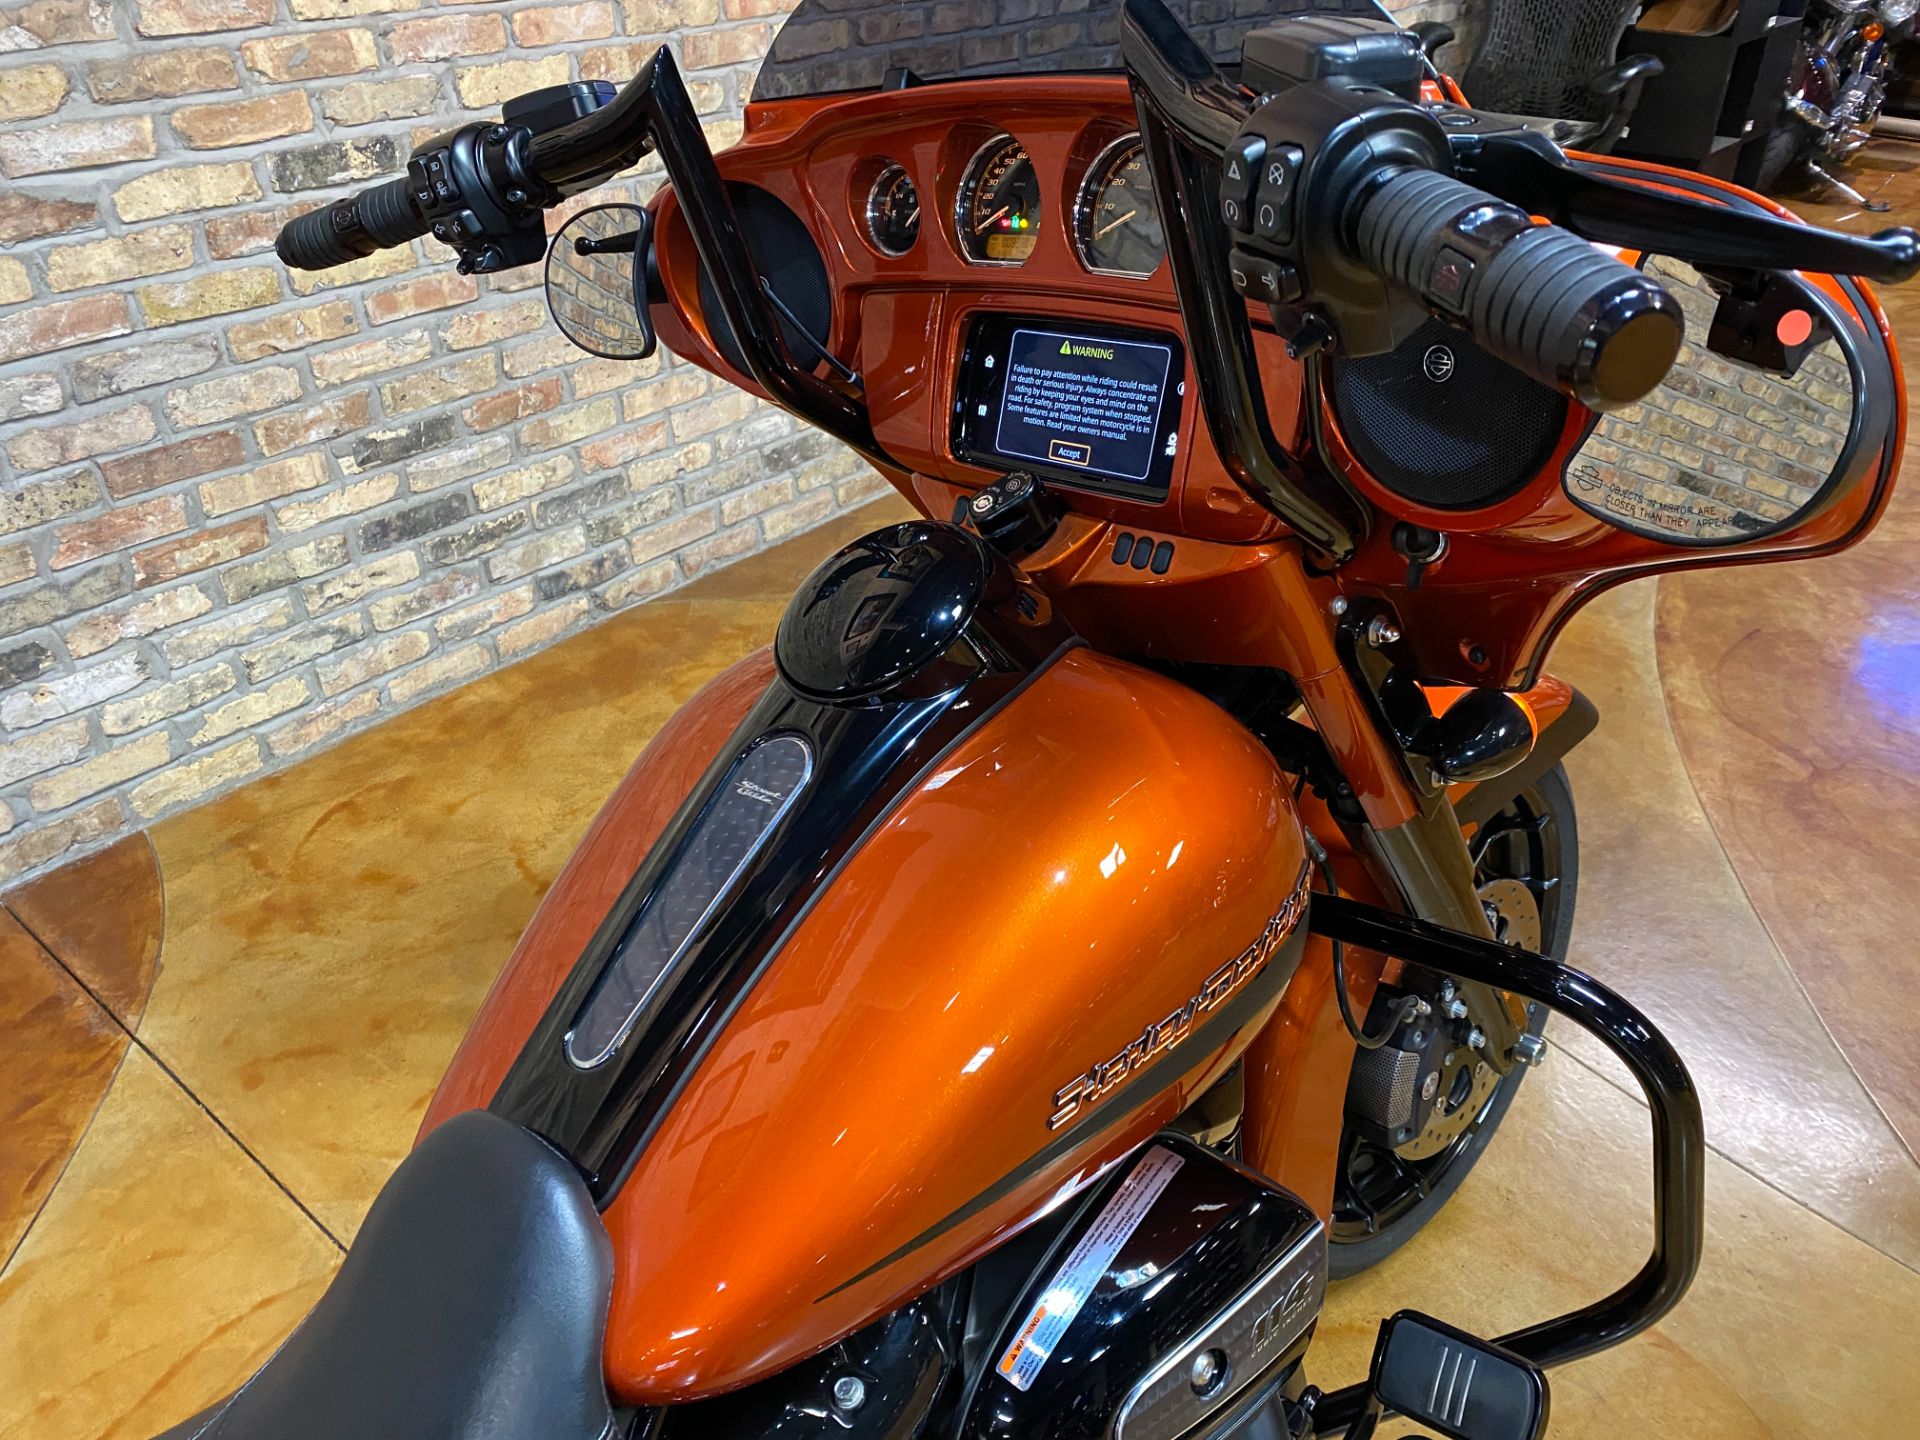 2019 Harley-Davidson Street Glide® Special in Big Bend, Wisconsin - Photo 11